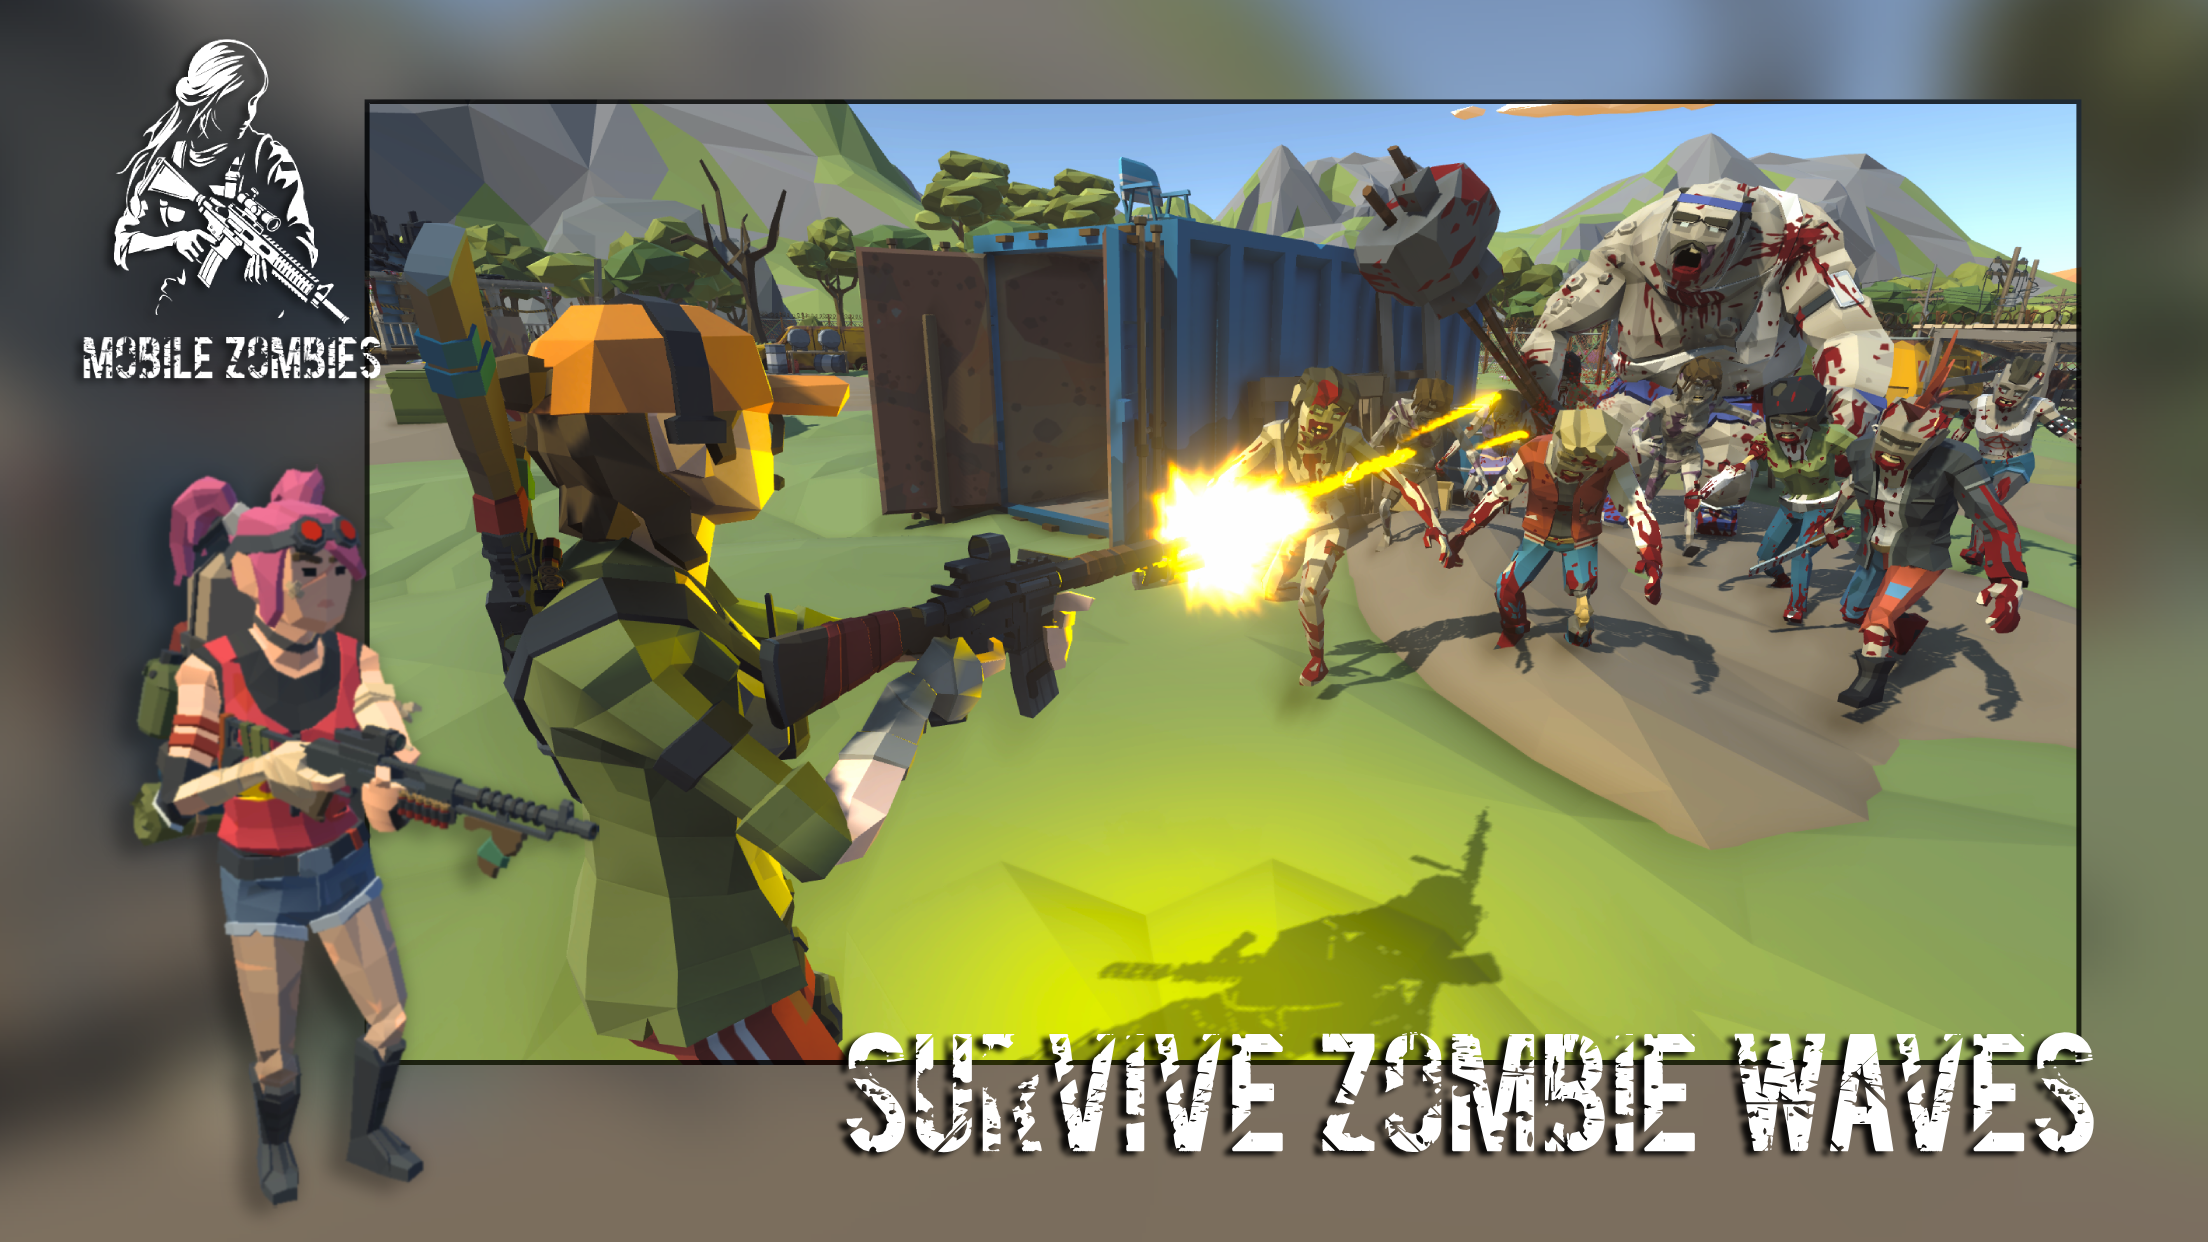 Screenshot 1 of Mobile Zombies: Horde Survival 0.1.97